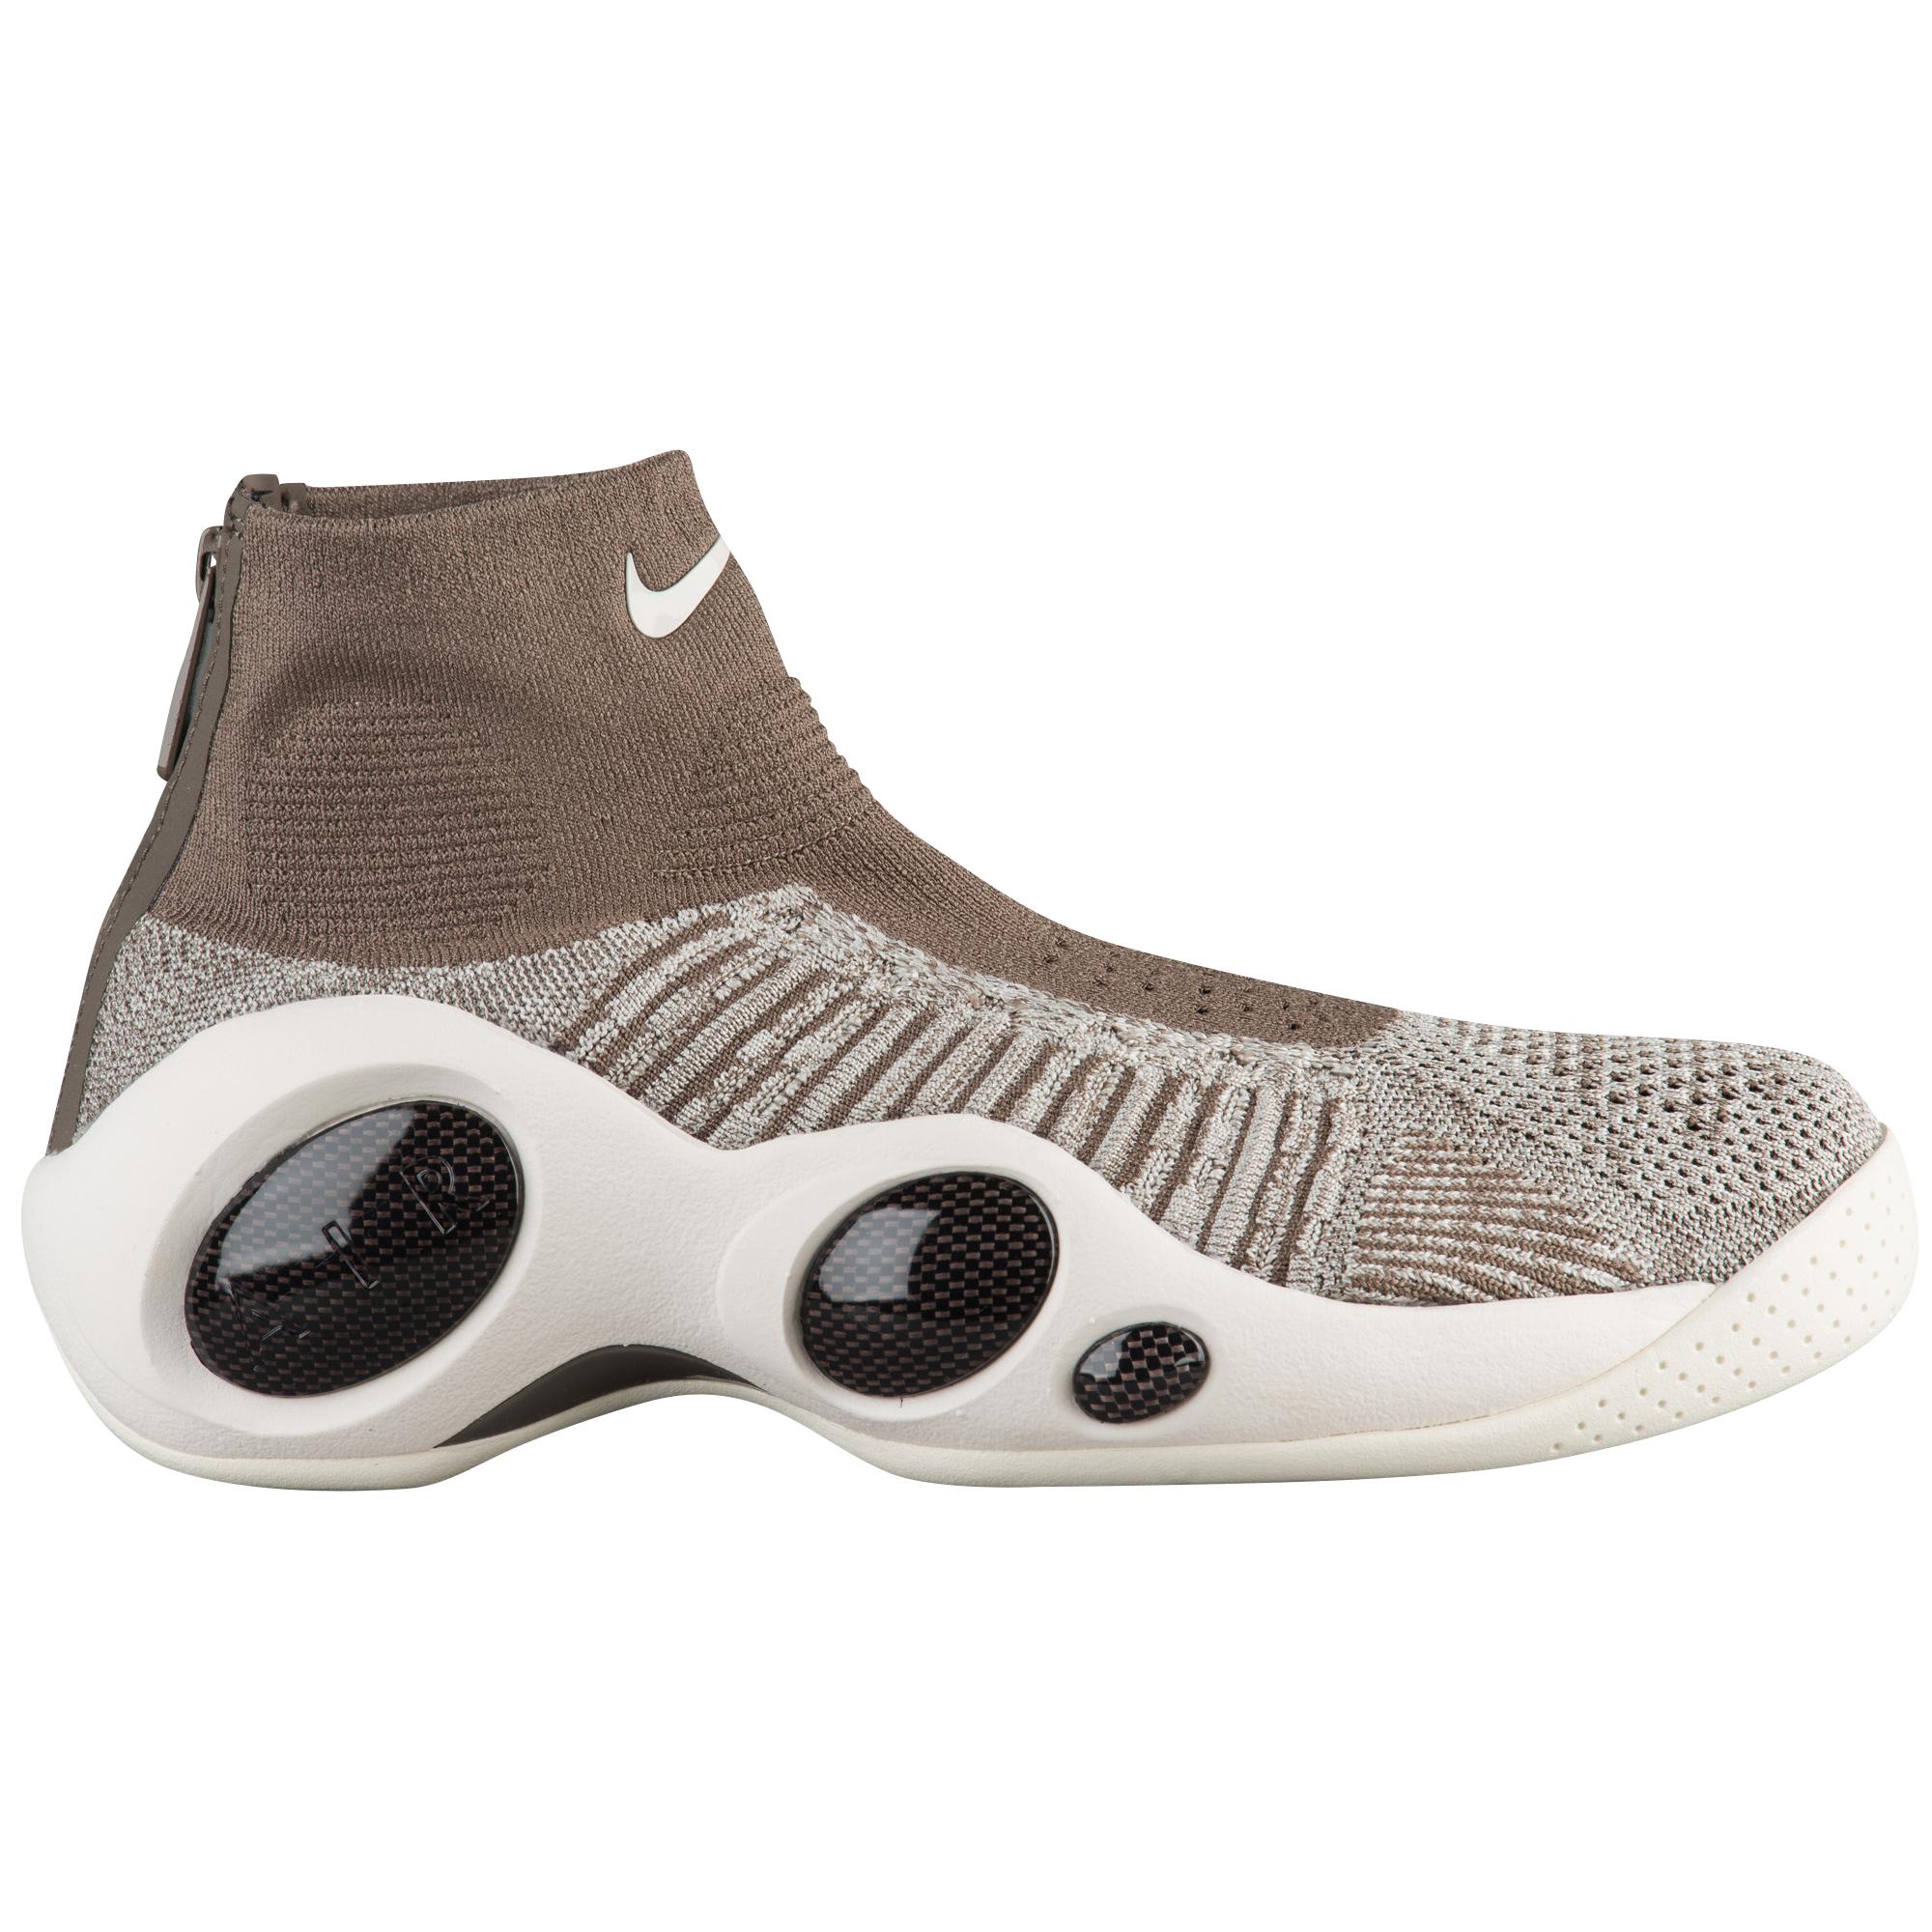 Nike Flight Bonafide Basketball Shoes in Gray for Men - Lyst